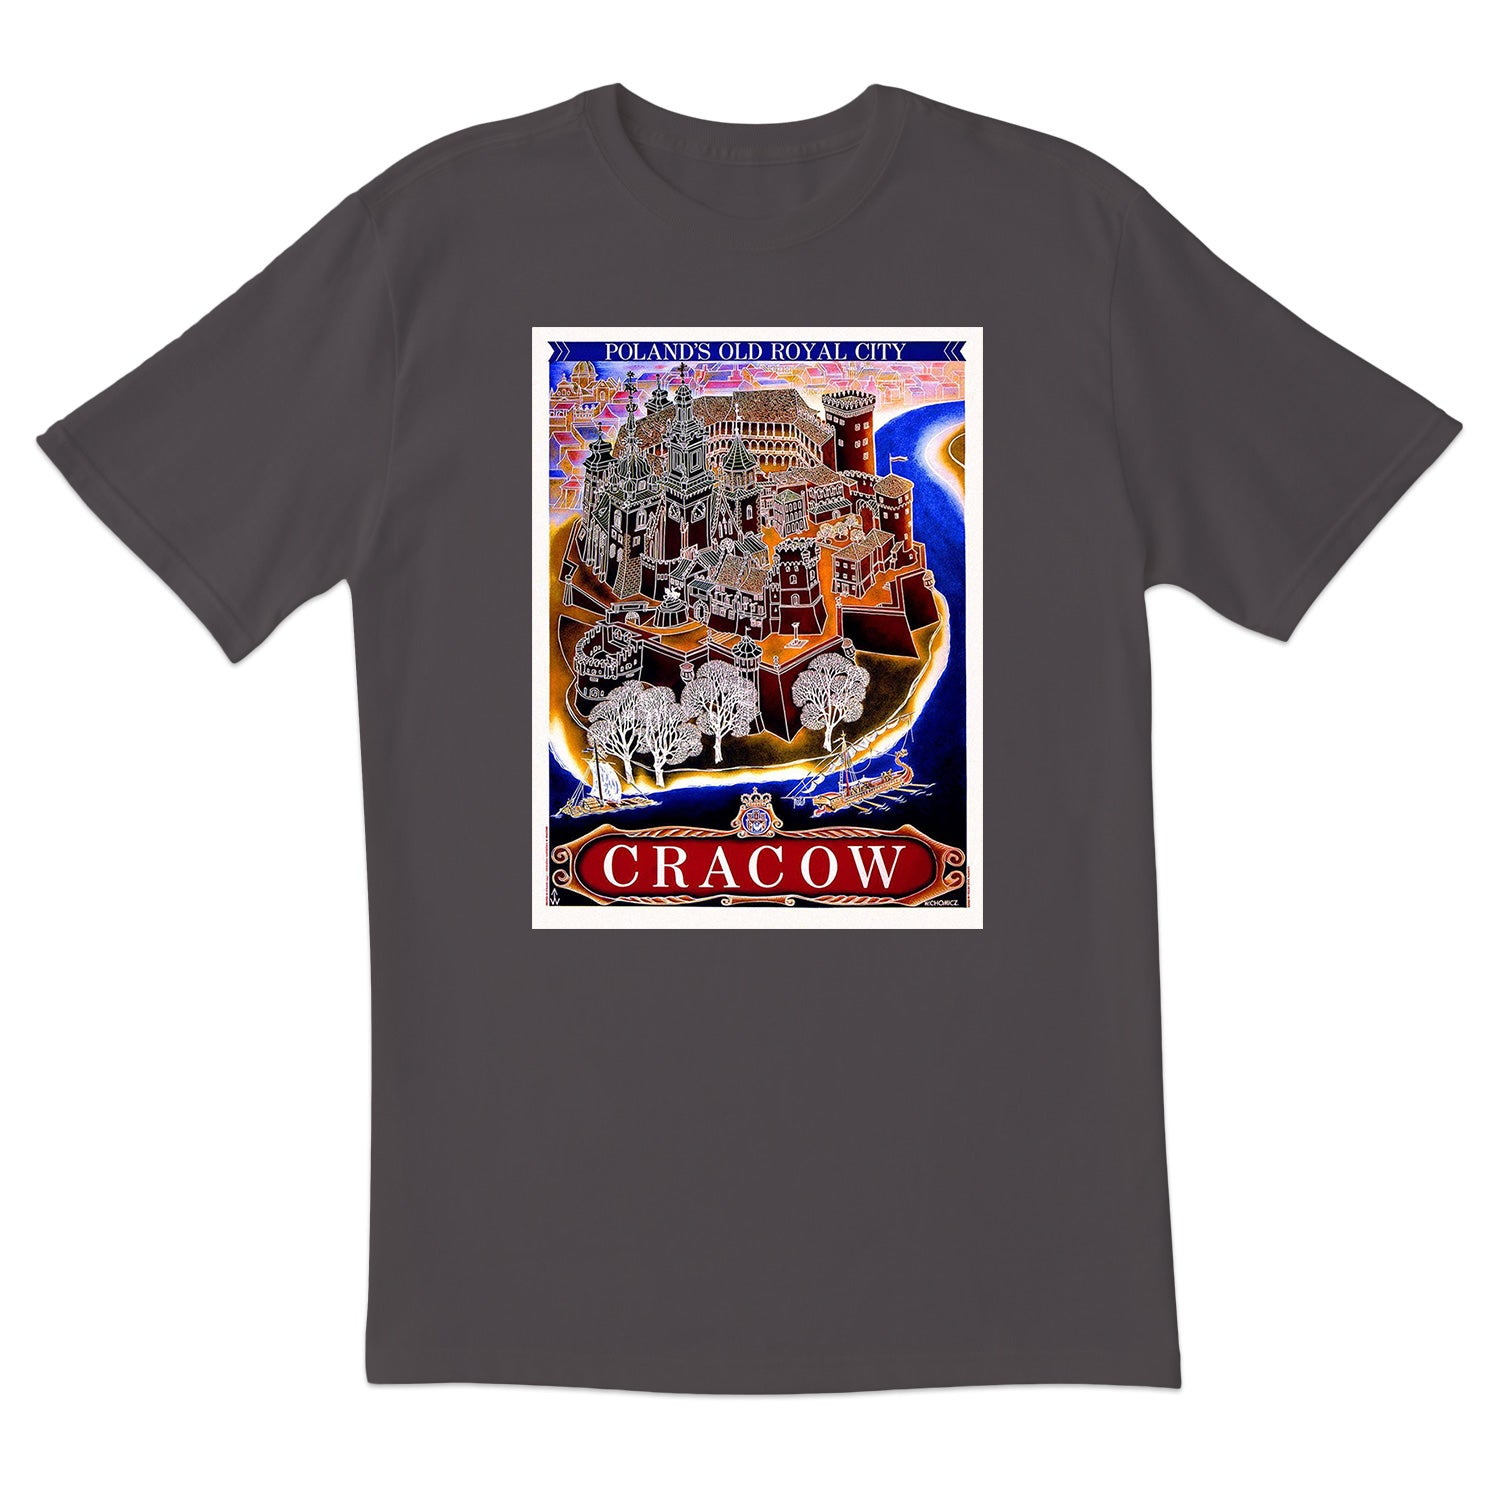 Vintage Poster Cracow PLs Old Royal City Short Sleeve Tshirt